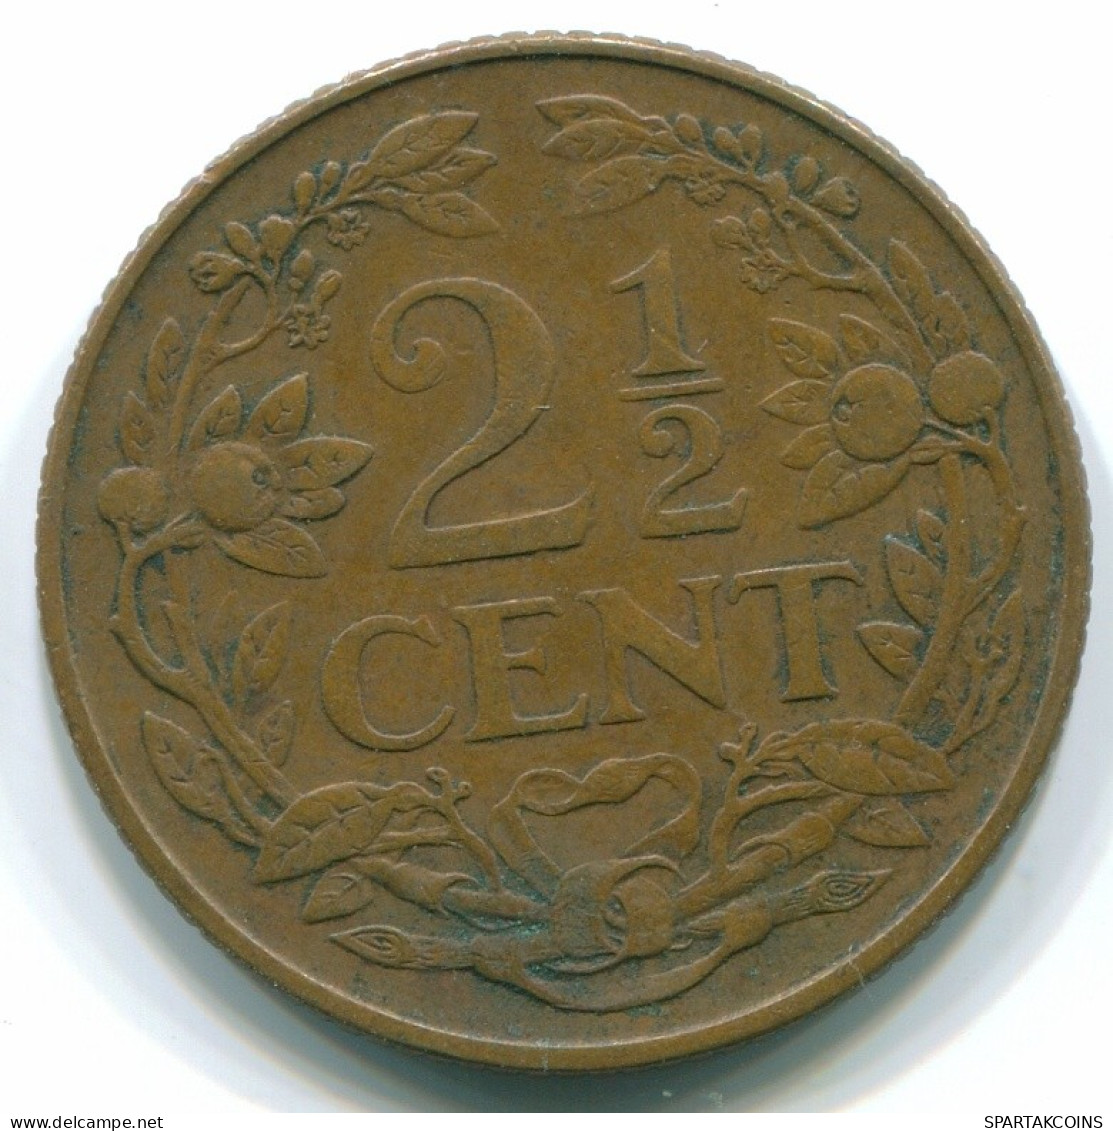 2 1/2 CENT 1965 CURACAO NÉERLANDAIS NETHERLANDS Bronze Colonial Pièce #S10242.F.A - Curaçao